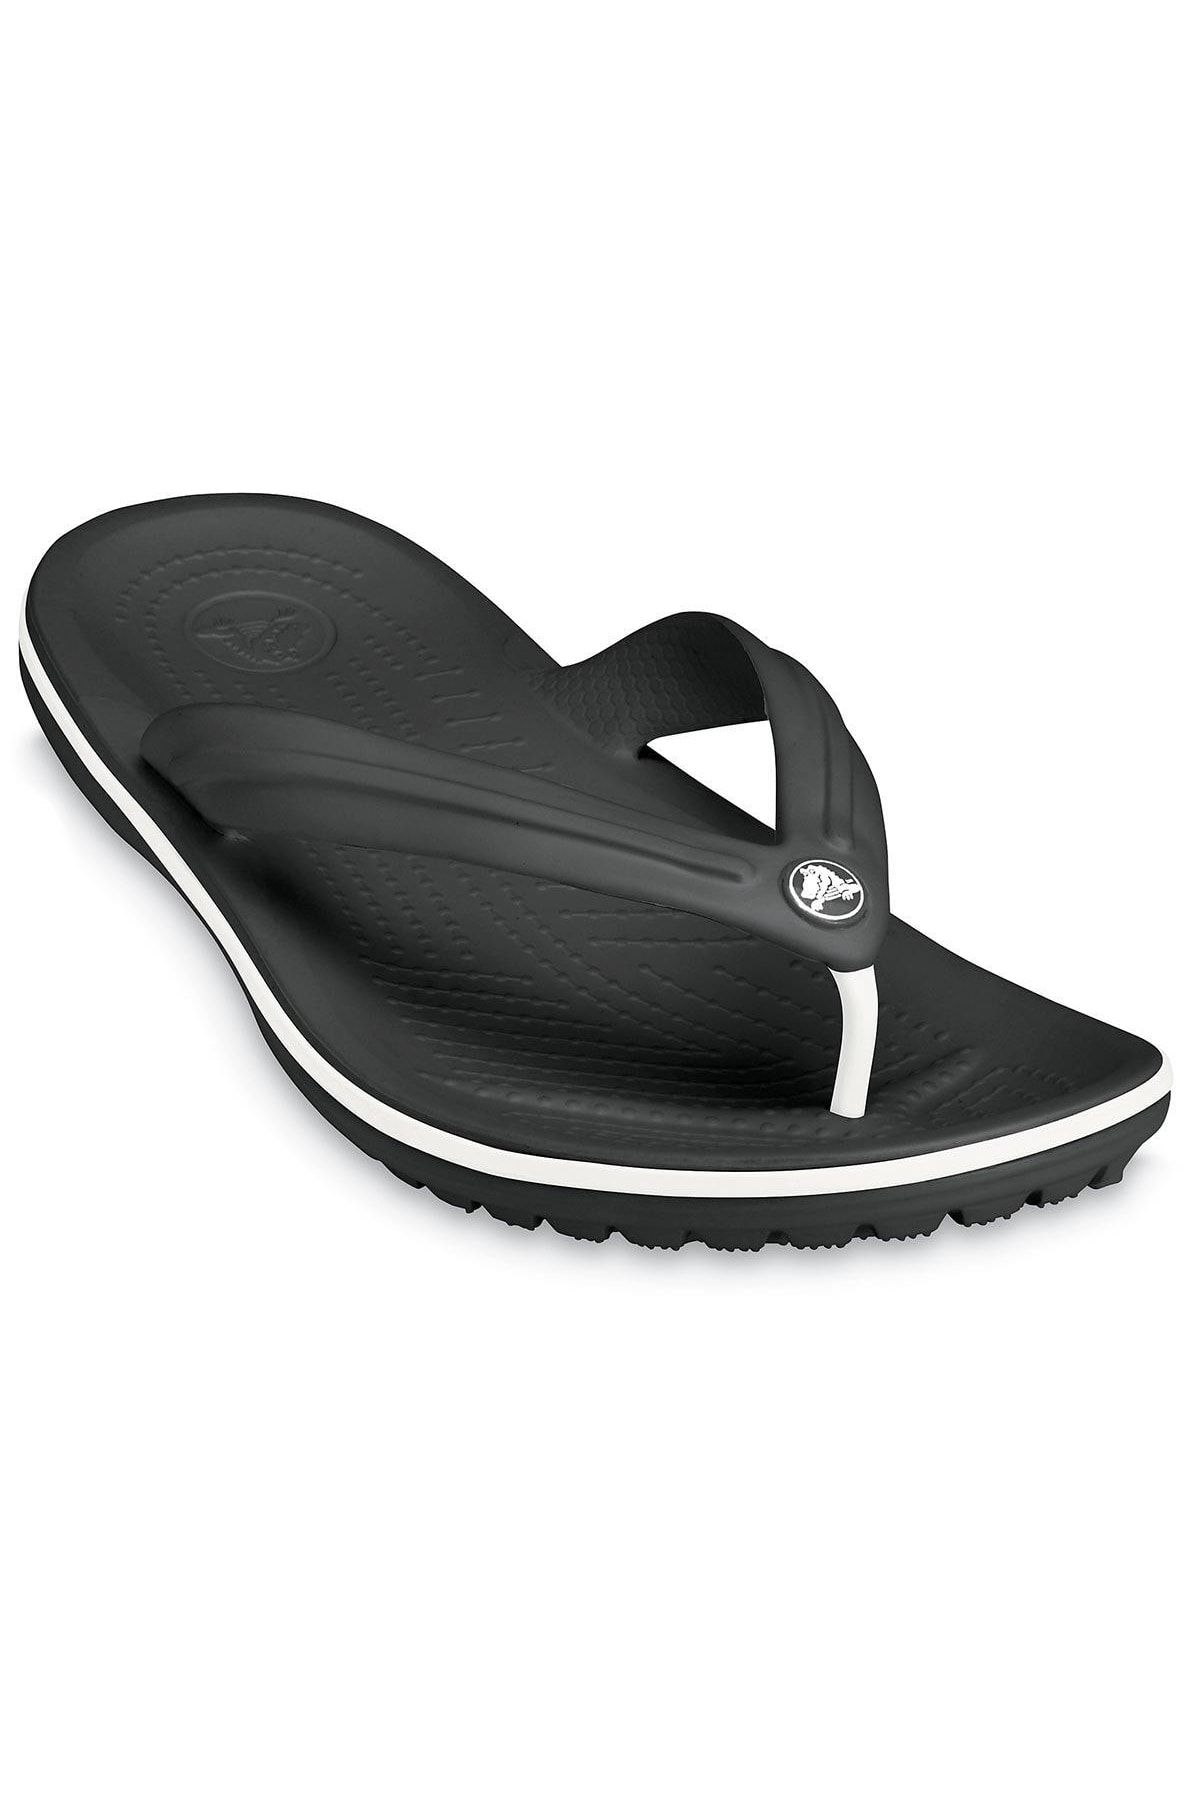 Crocs Crocband Flip Dlippers CR11033-001